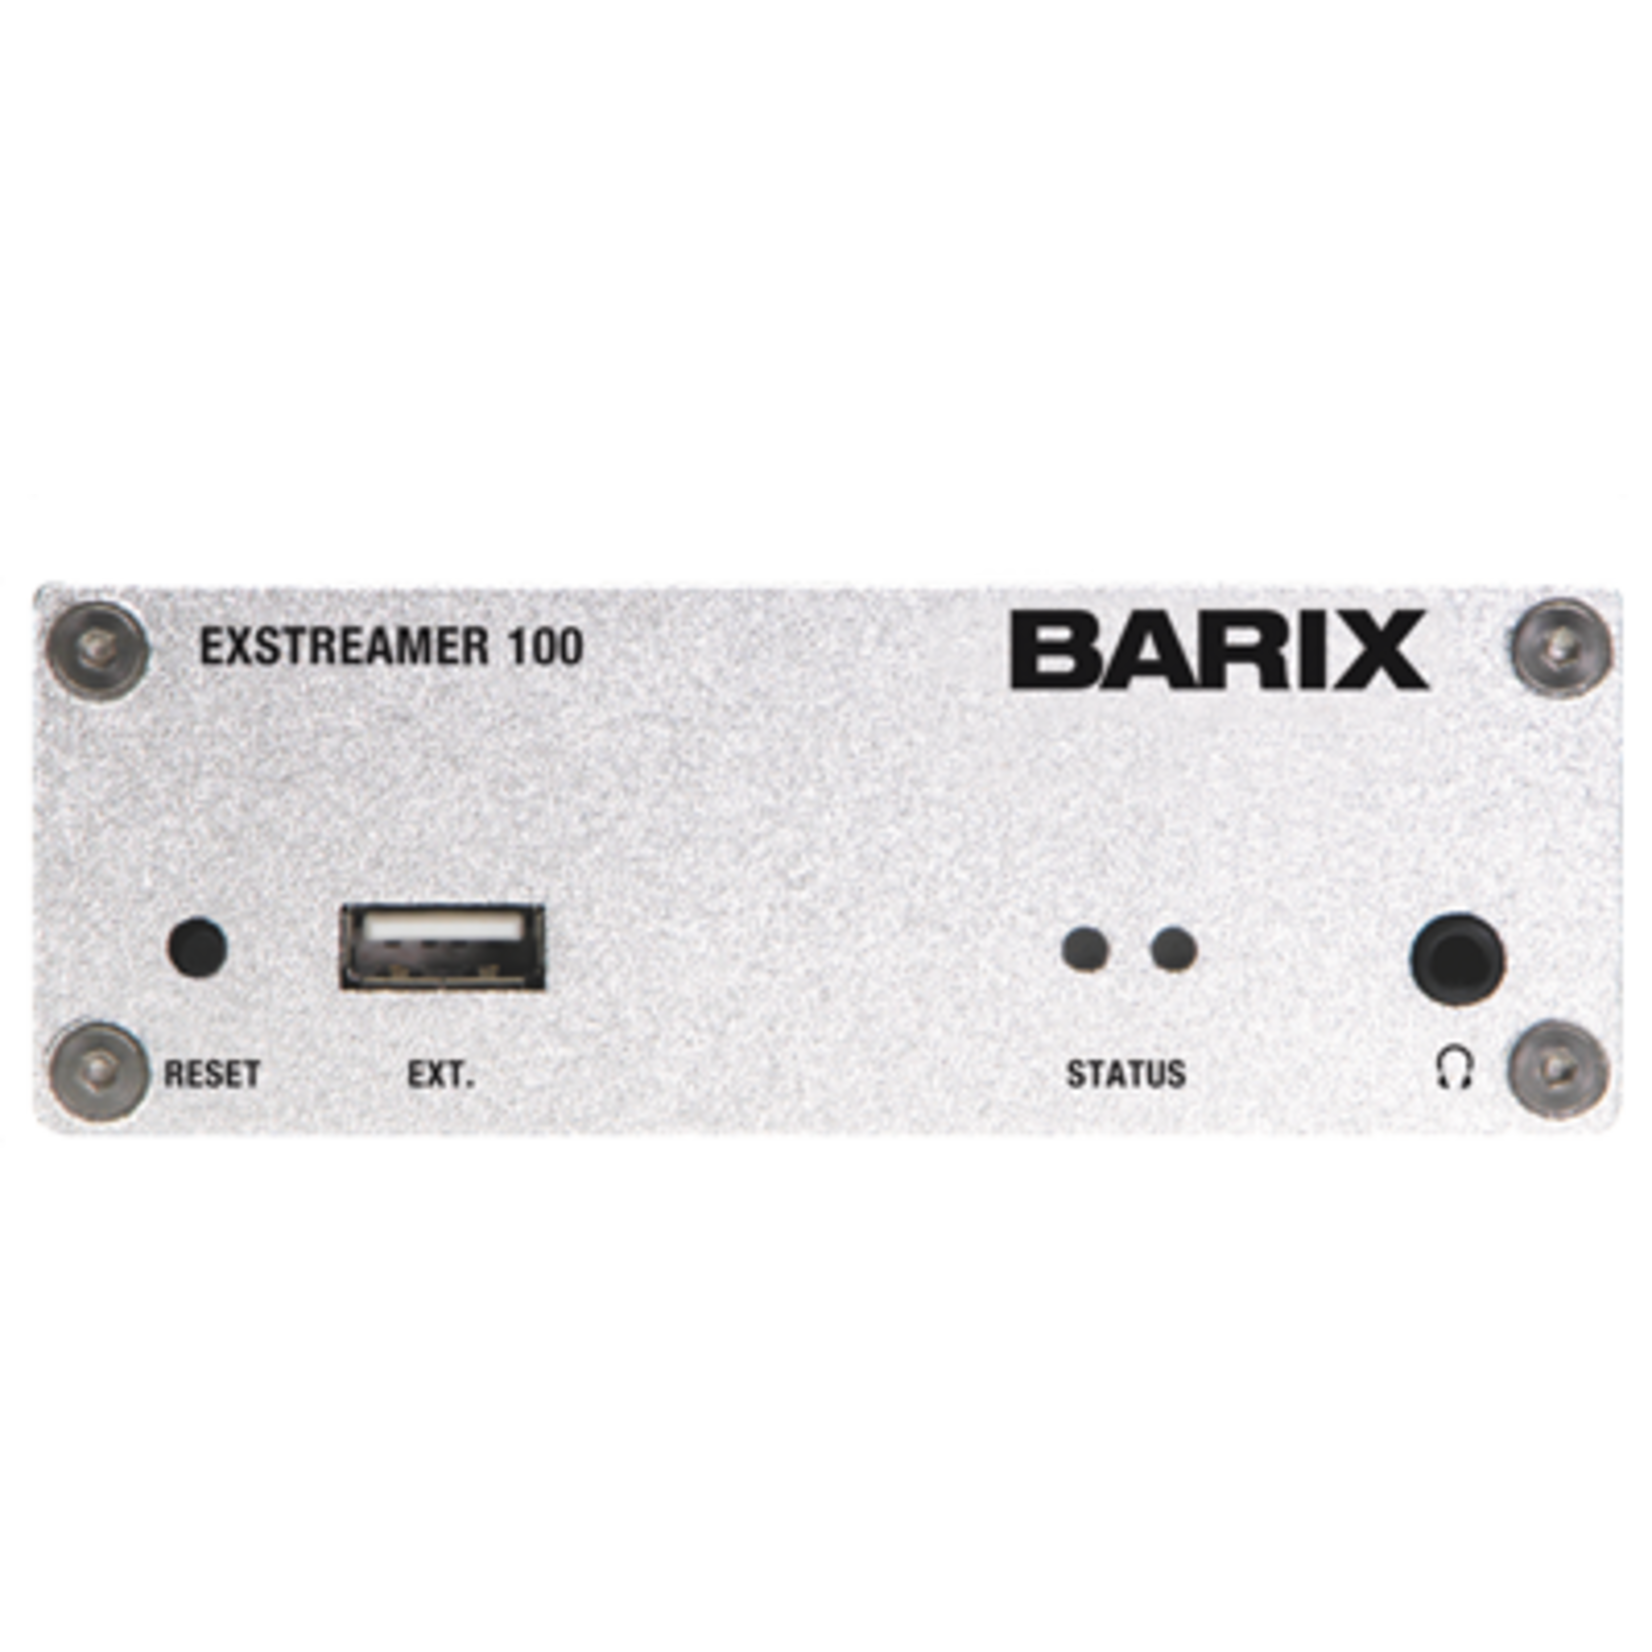 BARIX Exstreamer 100 EU package (230V)